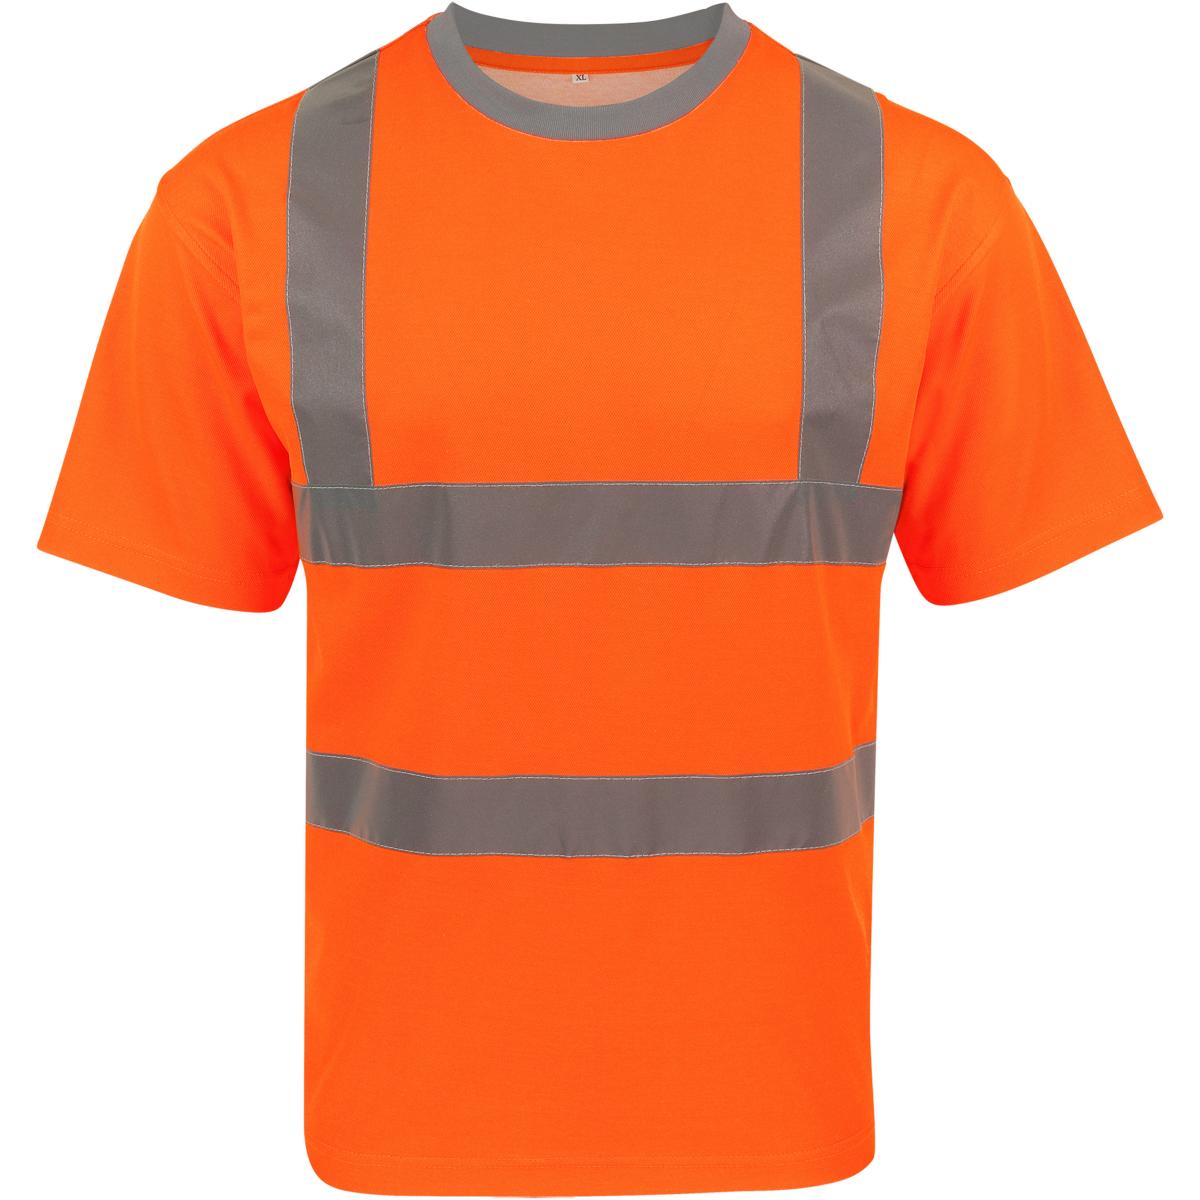 Hersteller: Korntex Herstellernummer: KXPCSHIRT Artikelbezeichnung: Herren Shirt Blended fabric T-Shirt, EN ISO 20471:2013 Farbe: Signal Orange